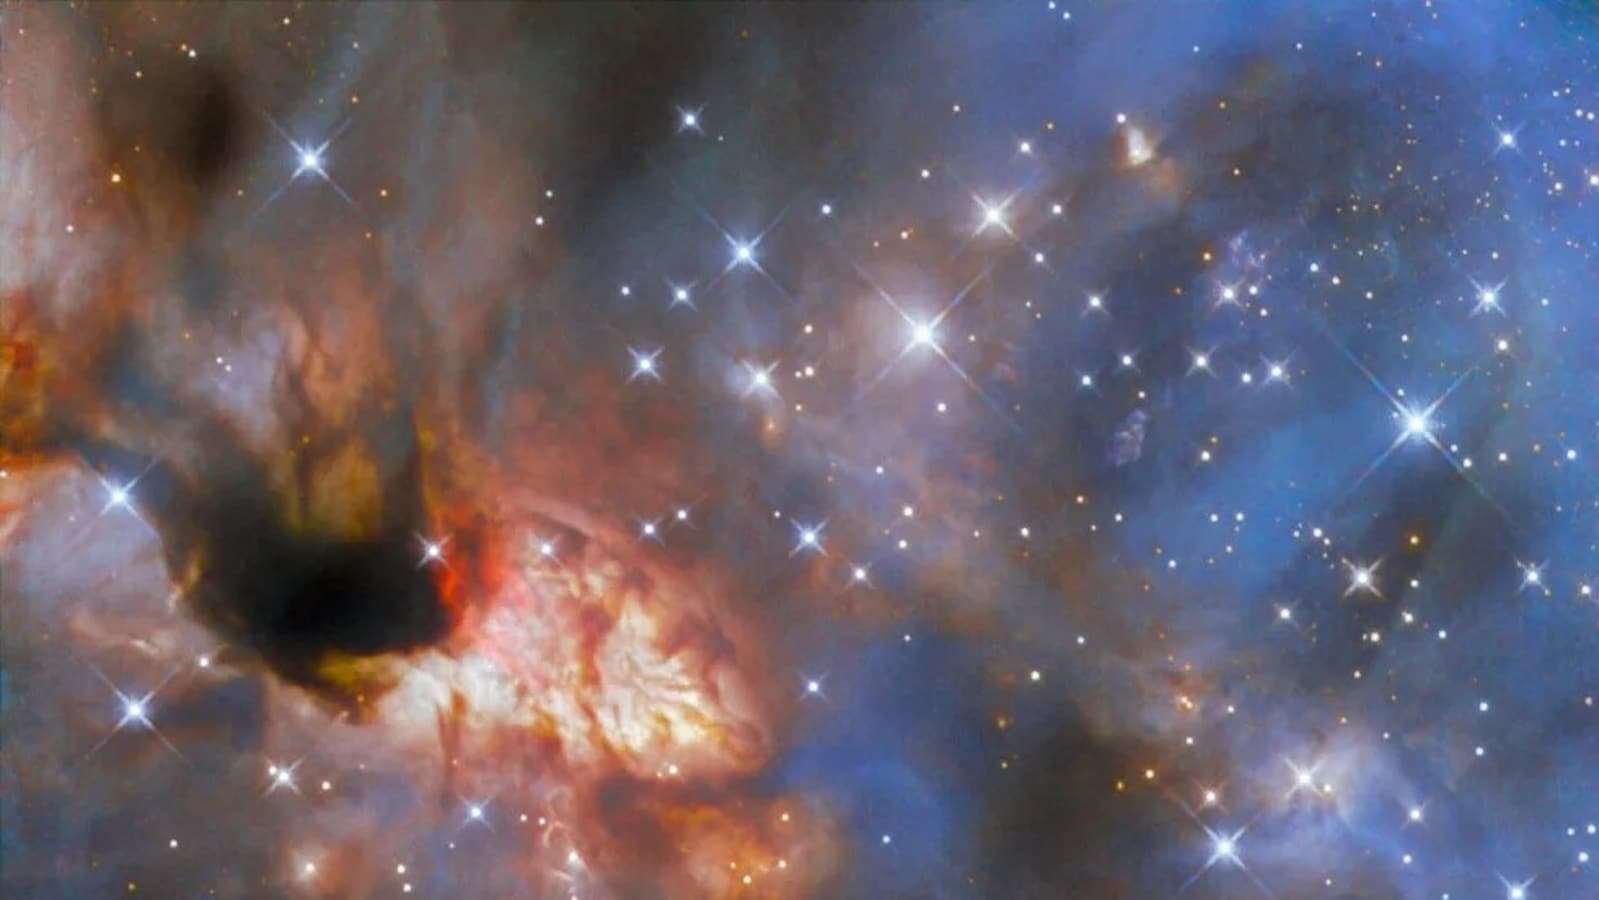 NASA’s Hubble Space Telescope image reveals massive star birth in celestial tapestry